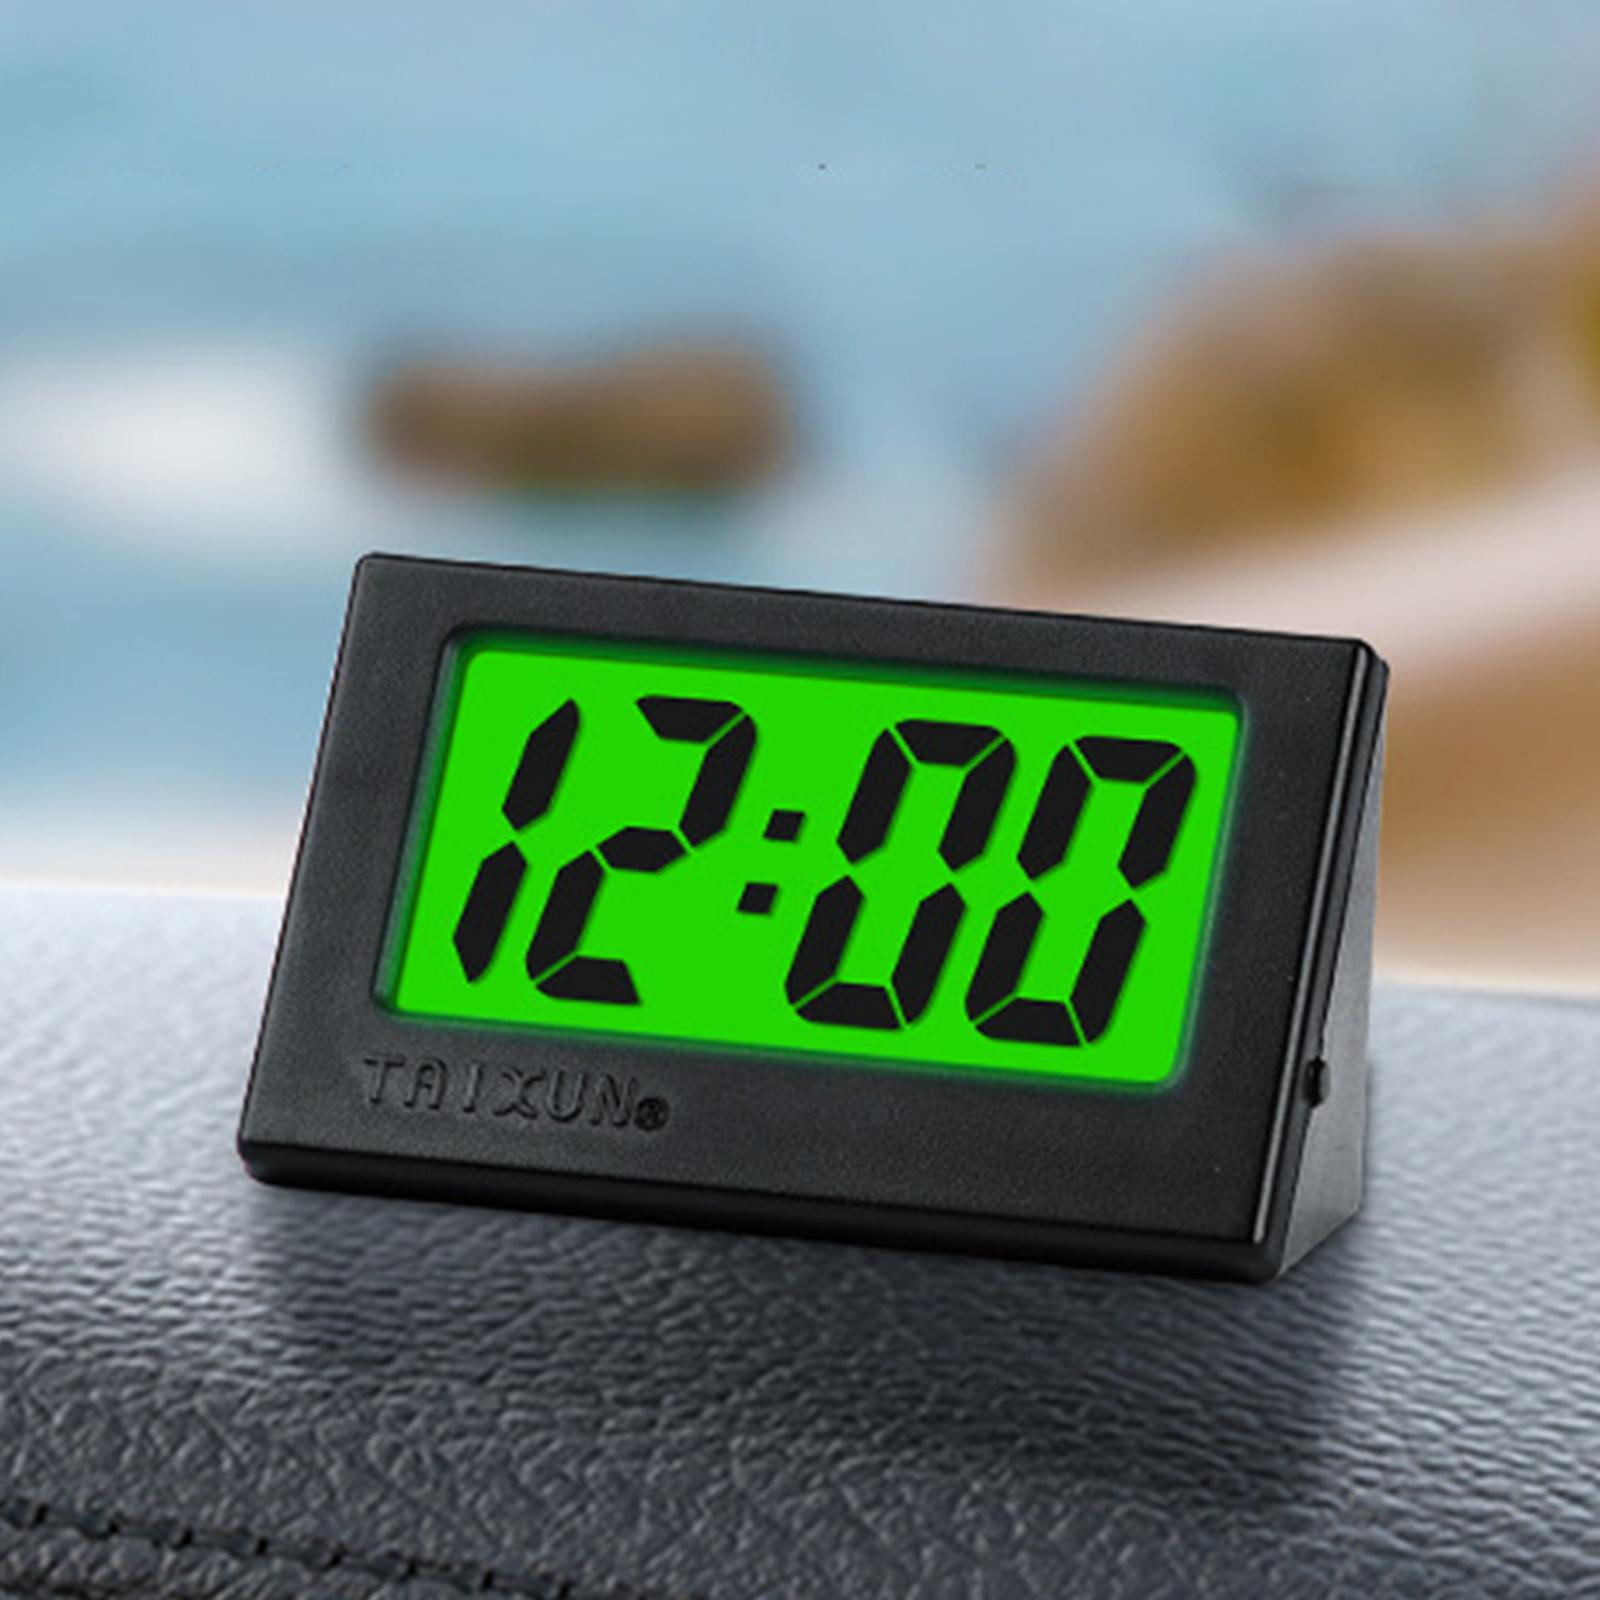 Sana Digital LCD Display Stopwatch Desk/Car Dashboard Alarm Clock